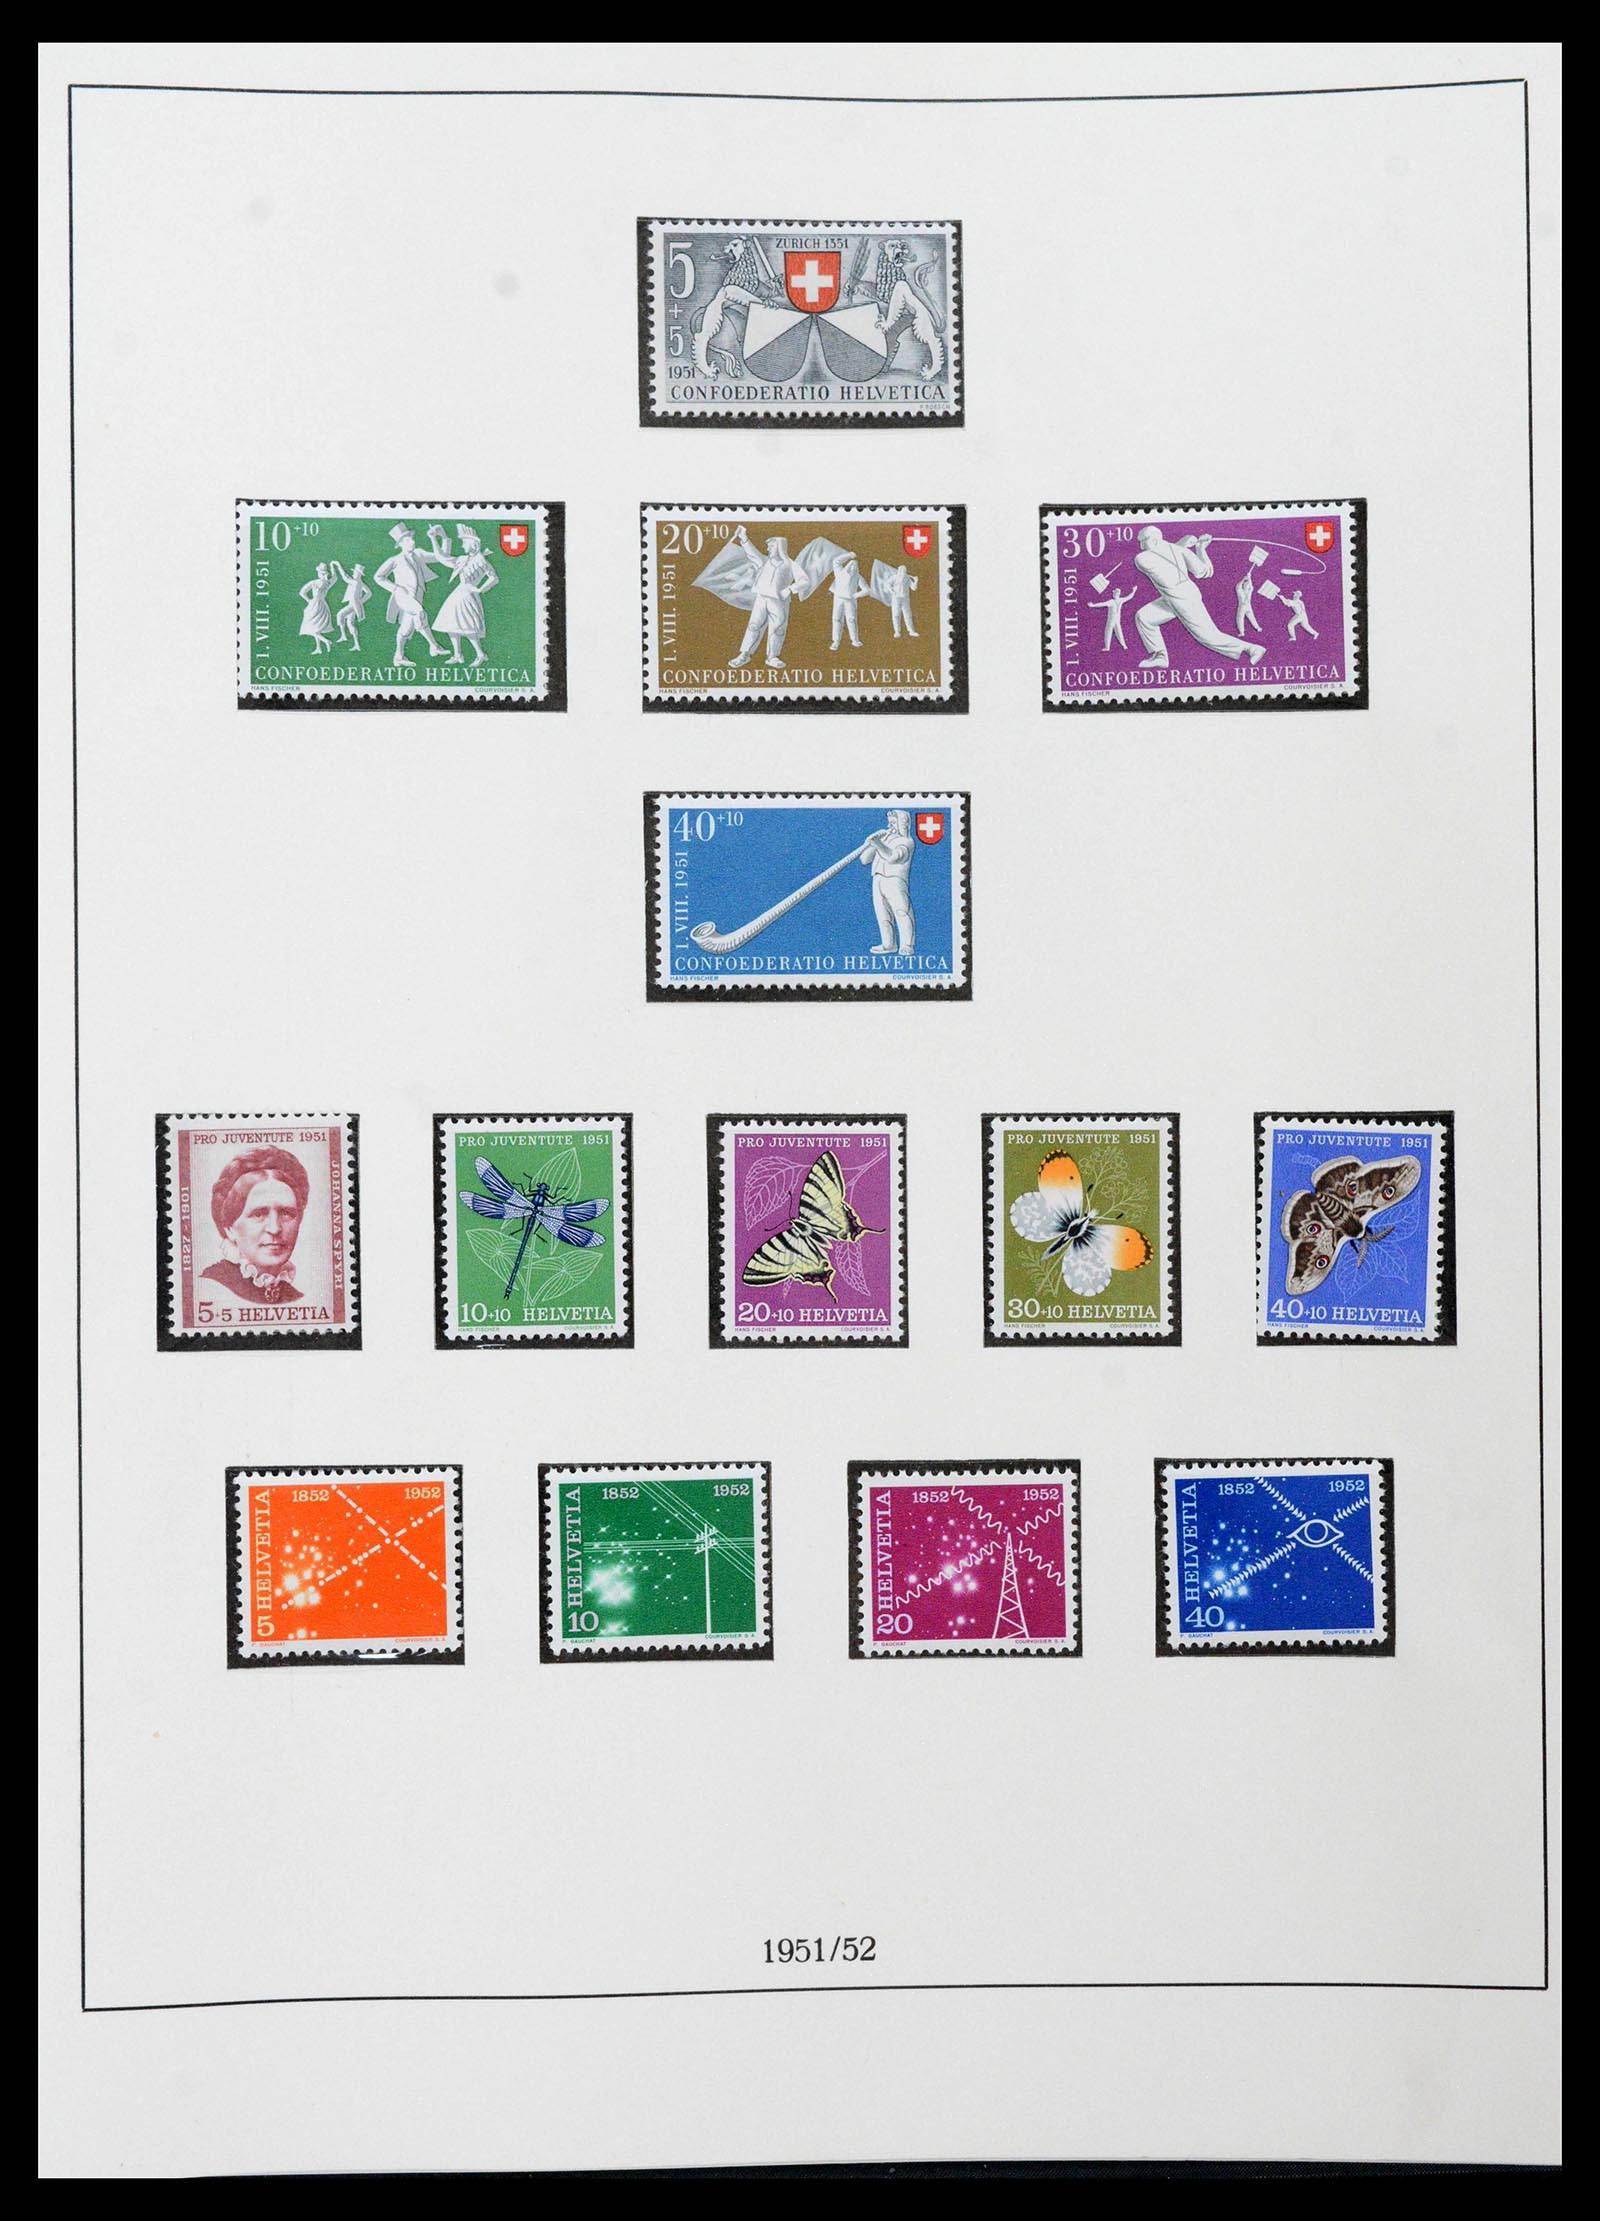 39235 0047 - Stamp collection 39235 Switzerland 1843-1960.